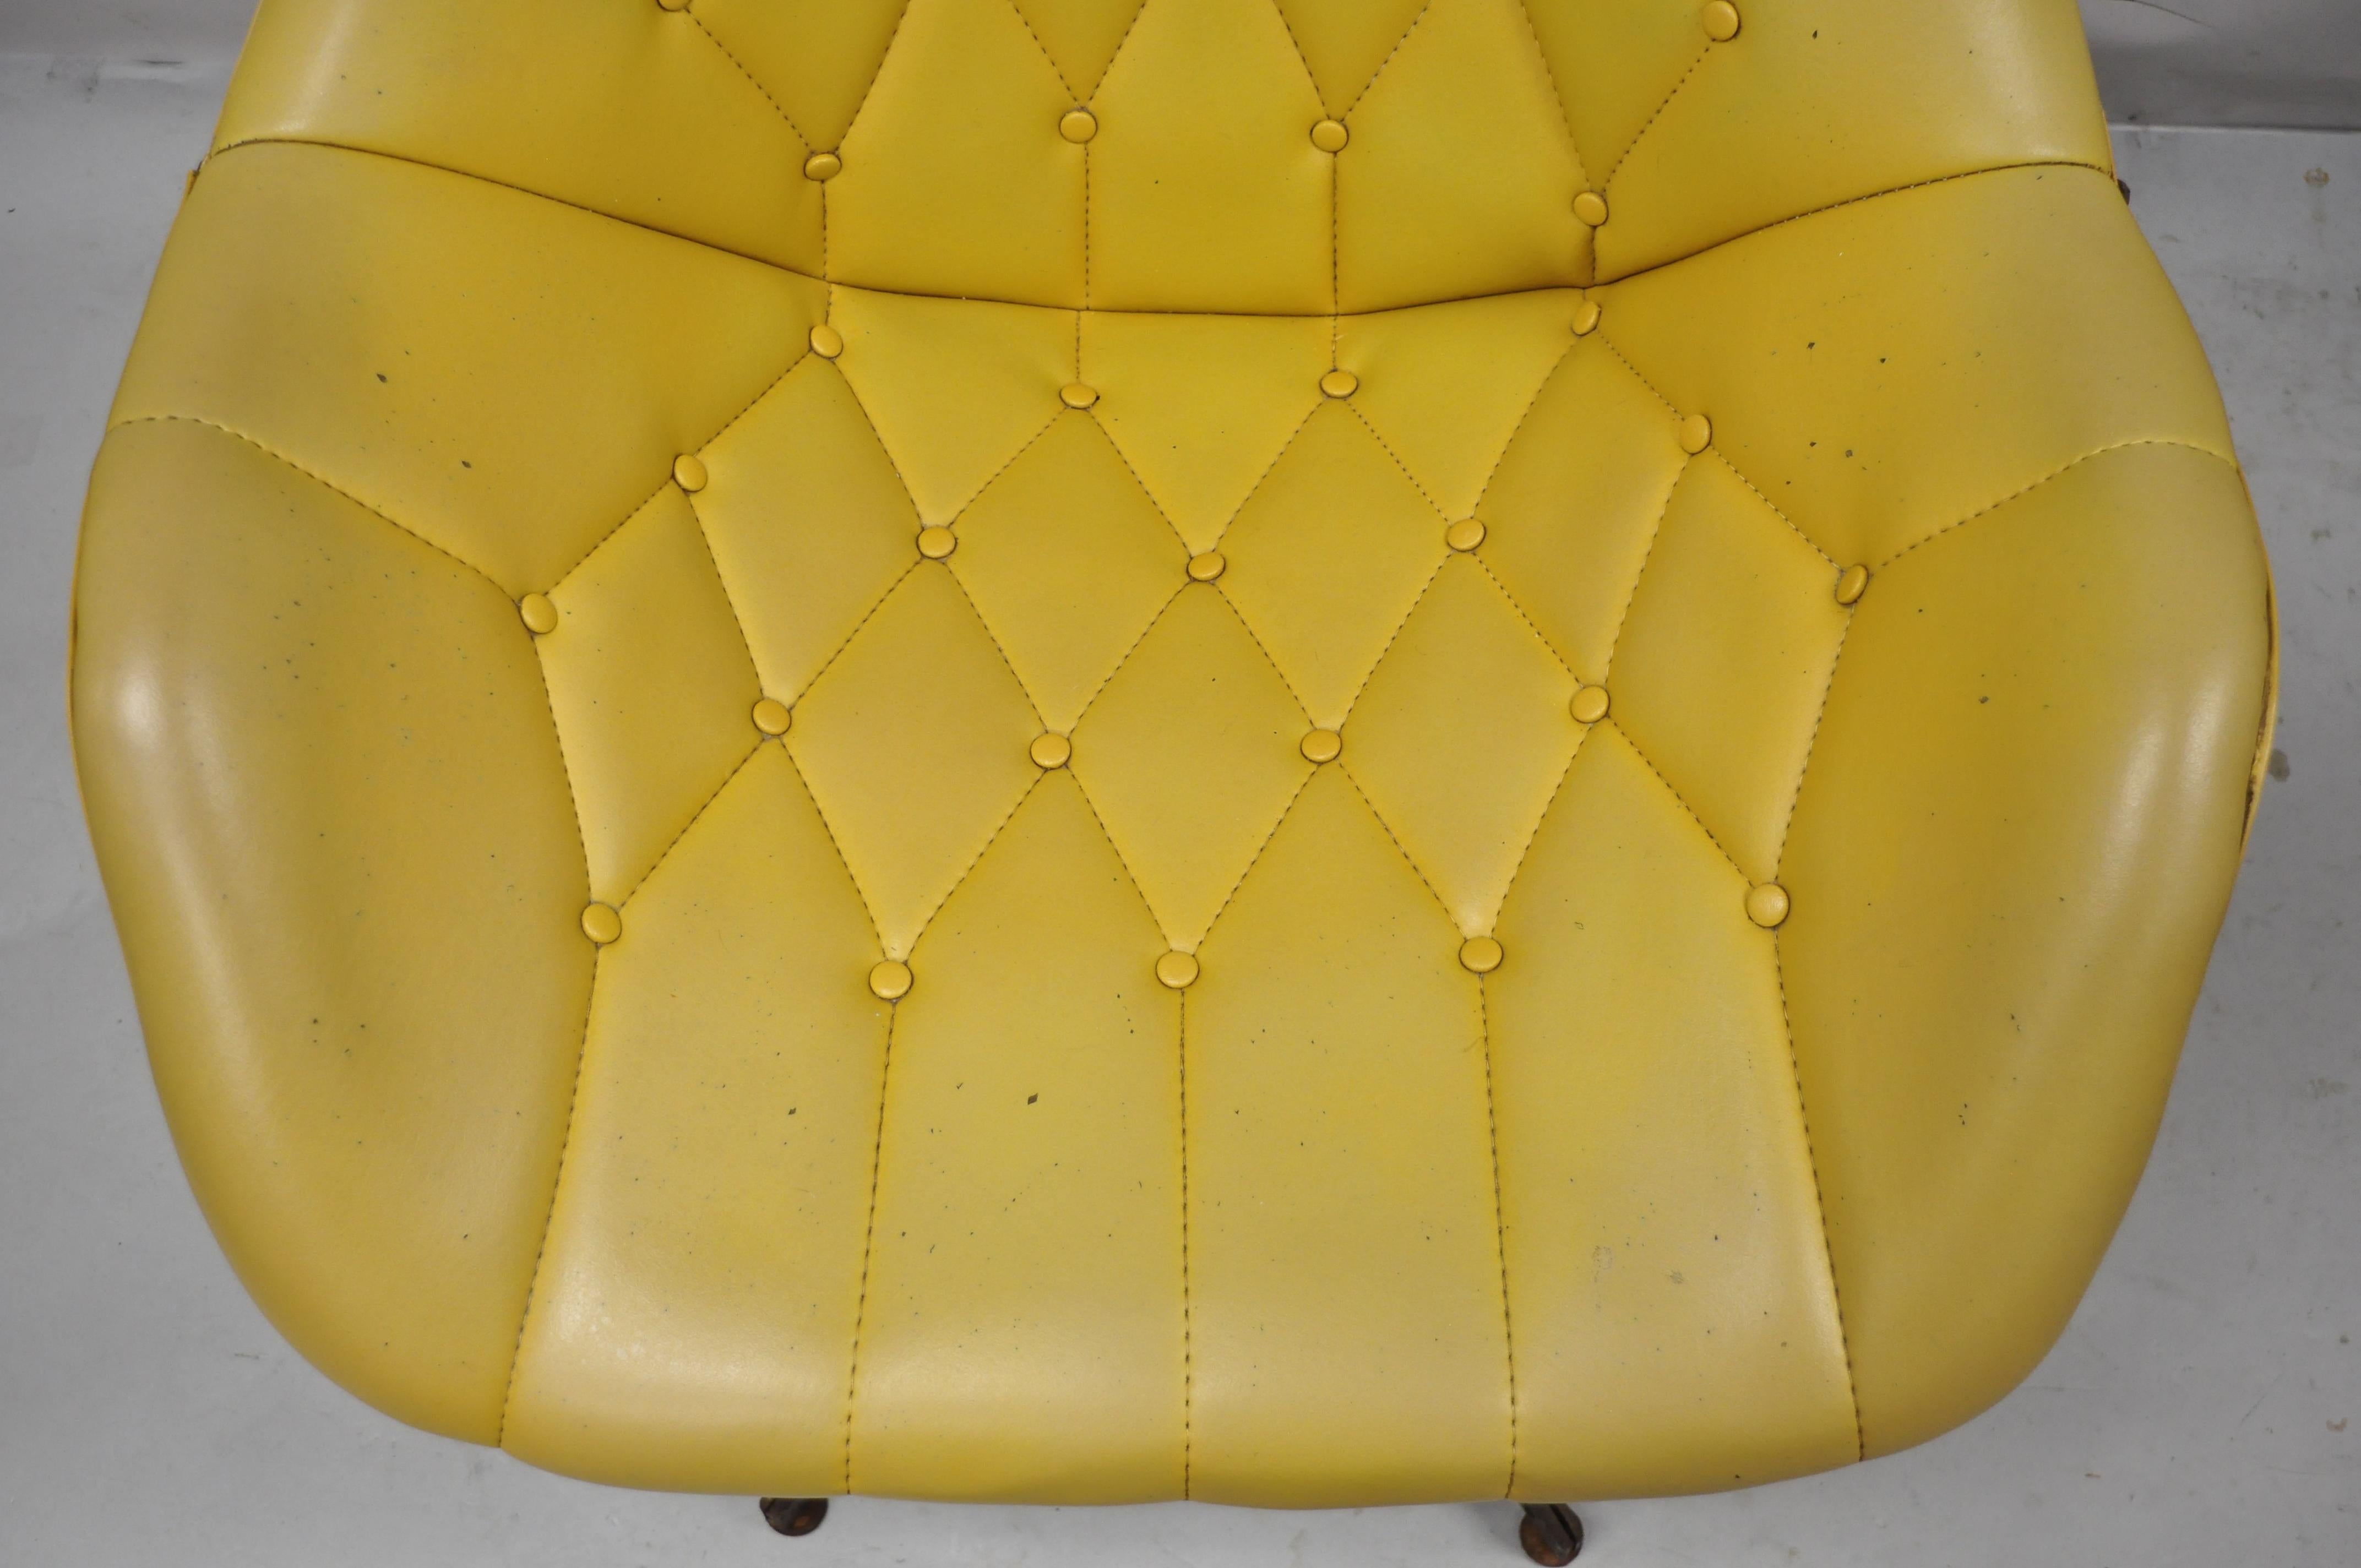 mid century modern yellow chair